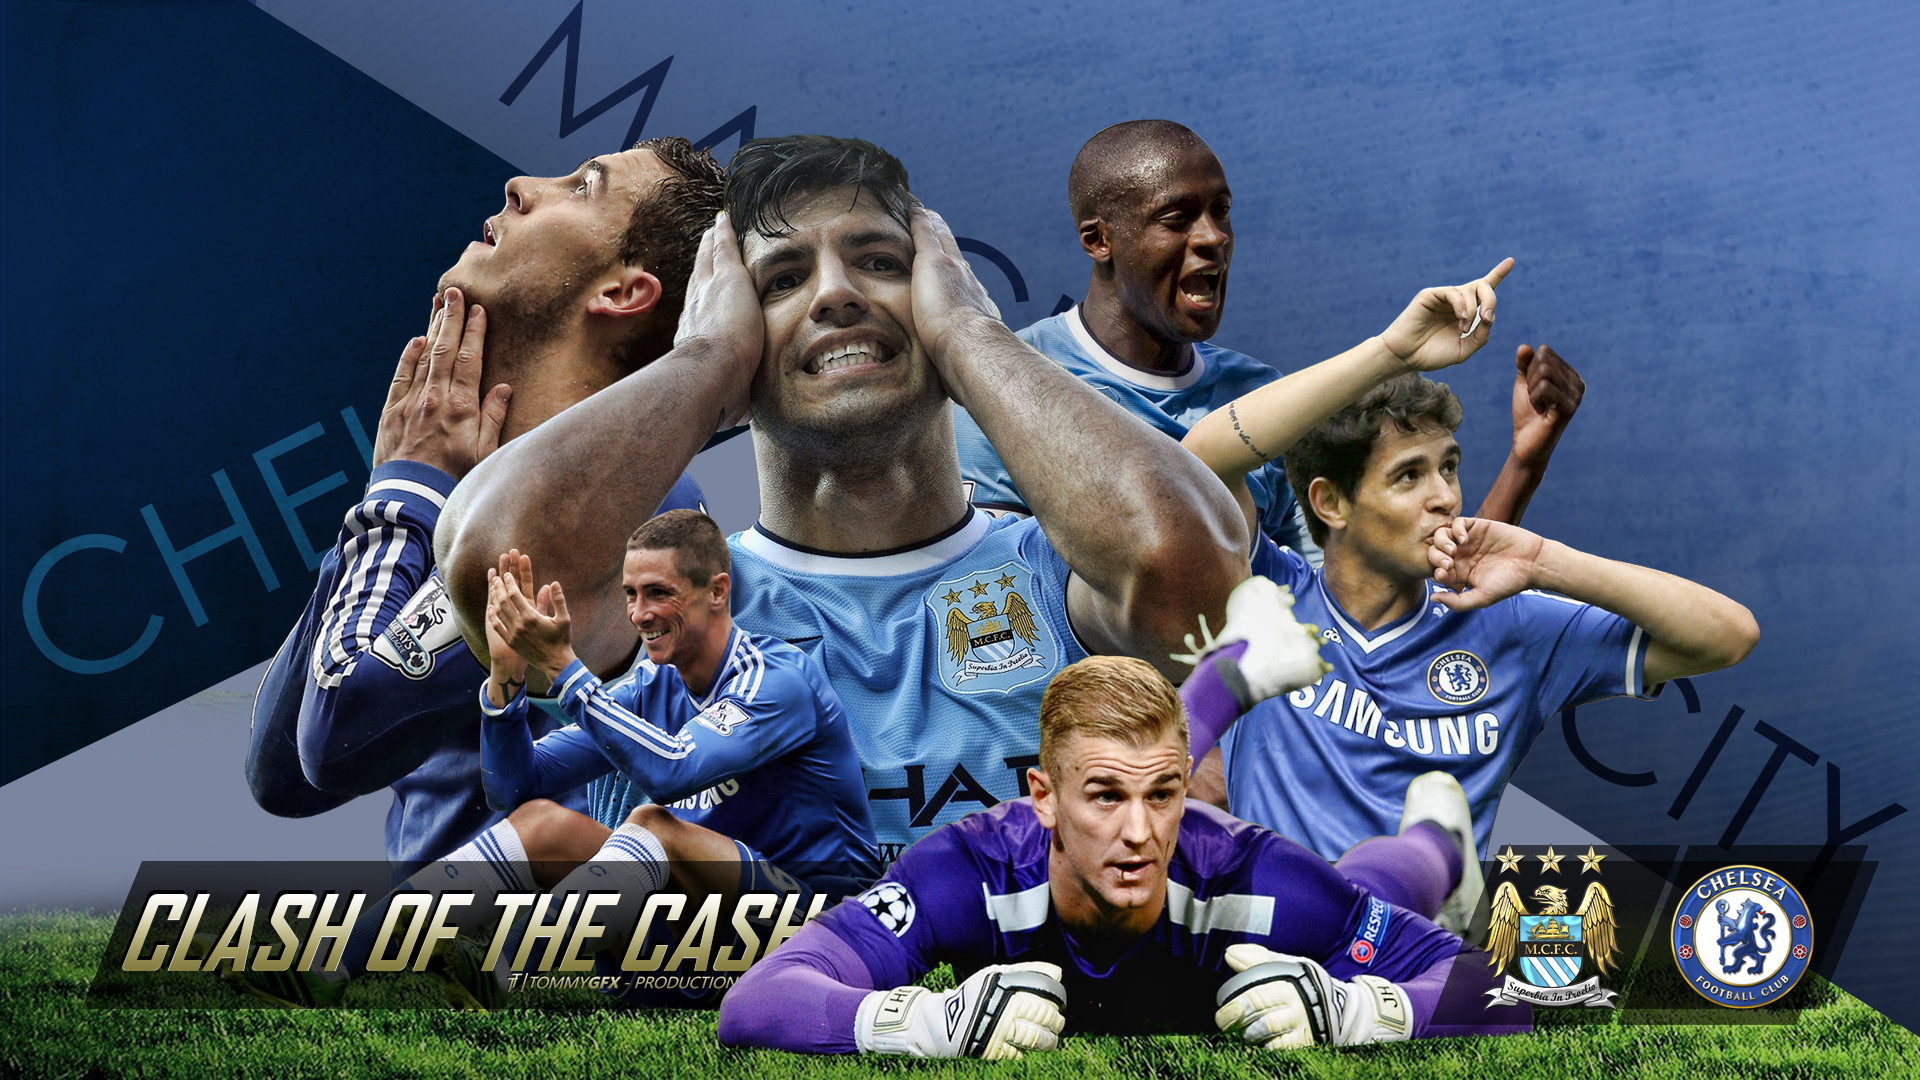 1920x1080 Manchester City vs Chelsea - Clash of the Cash